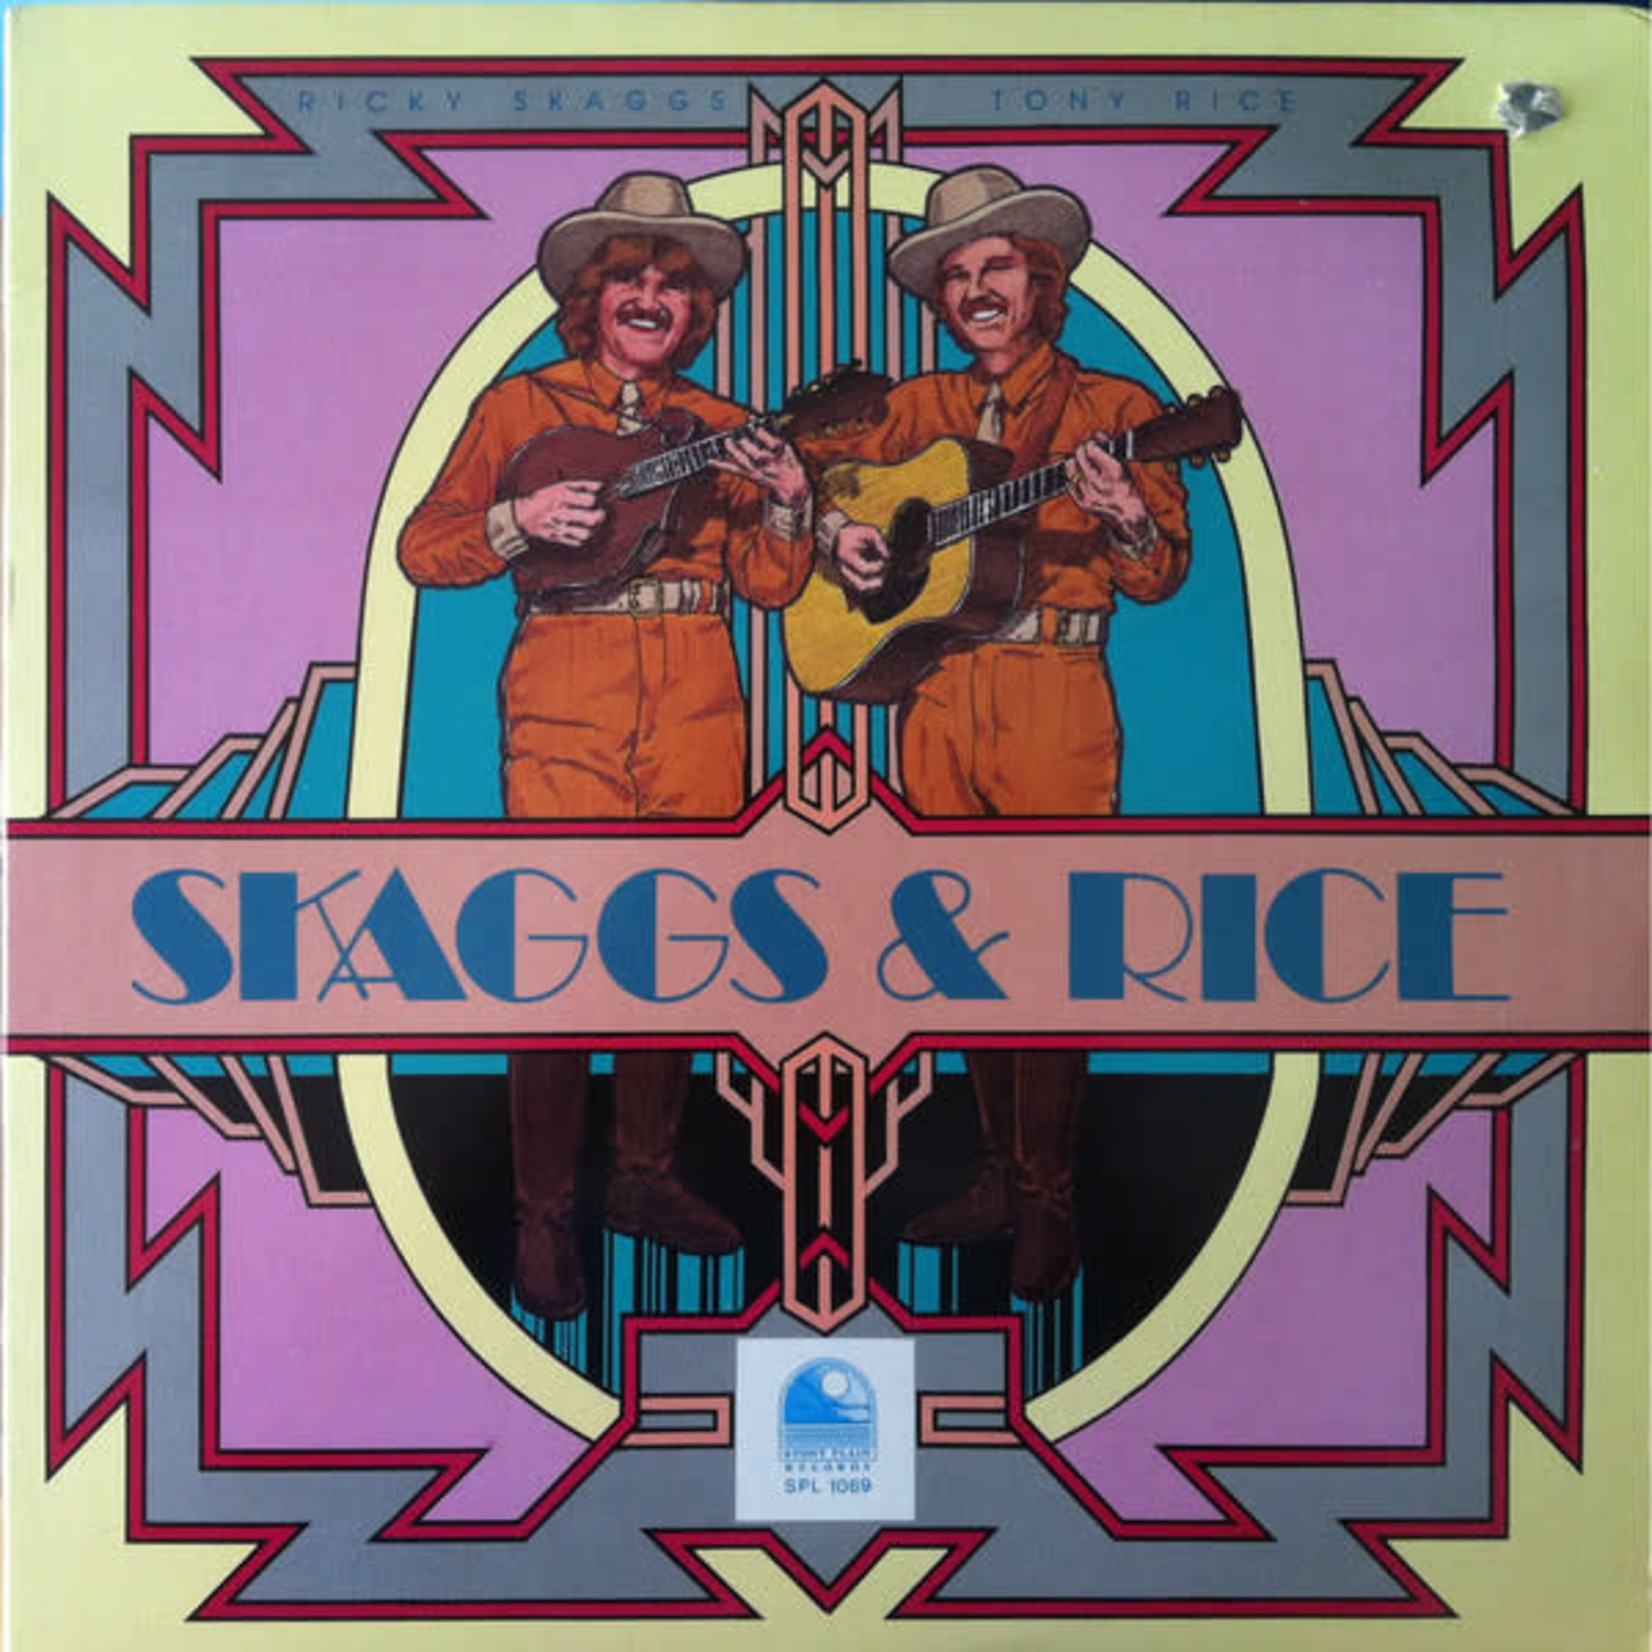 Ricky Skaggs Ricky Skaggs & Tony Rice – Skaggs & Rice (VG, 1980, LP, Stony Plain Records – SPL 1069)